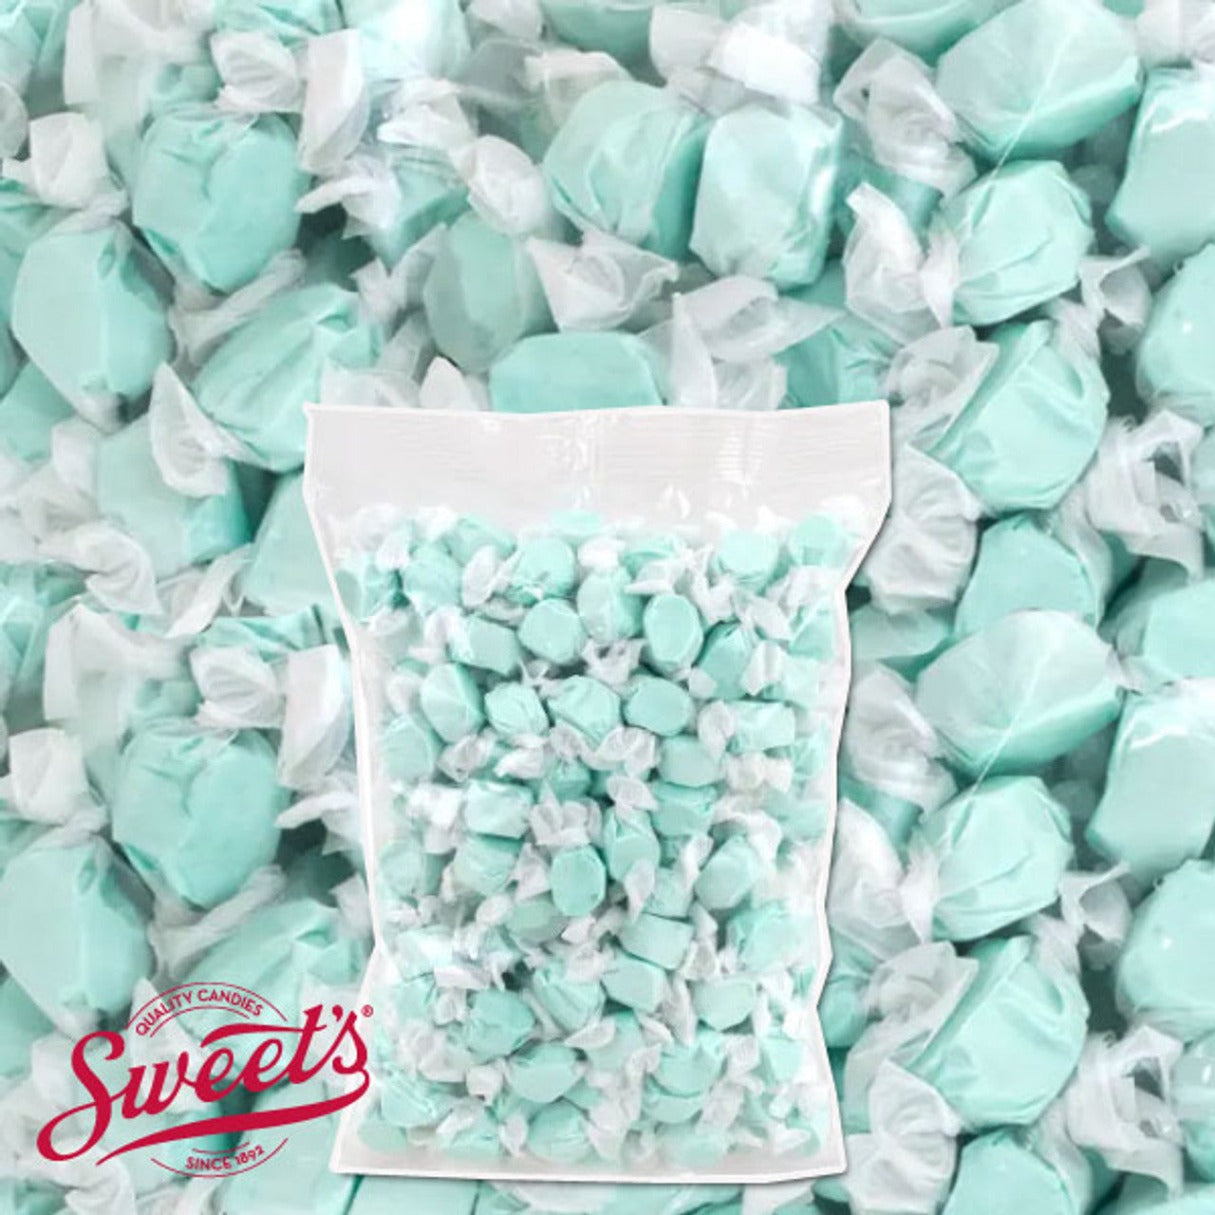 Sweet's Salt Water Taffy Cotton Candy Bag - 3lb